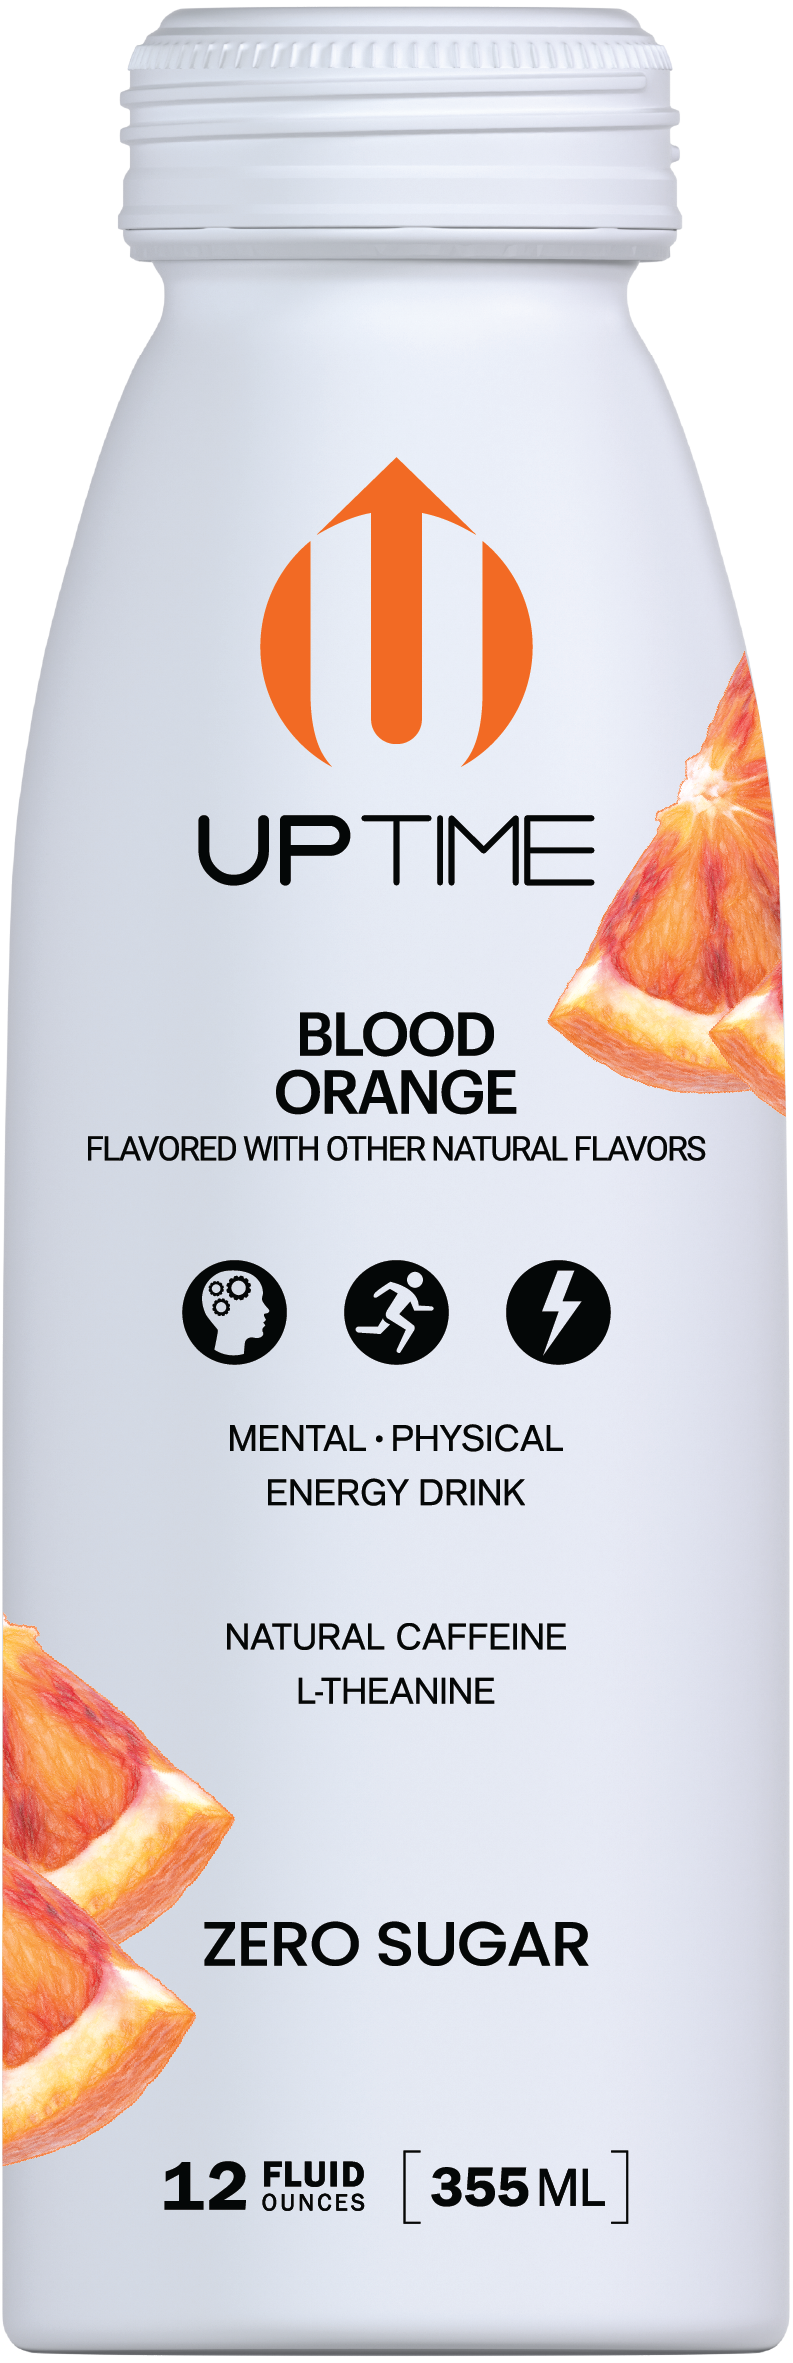 UPTIME Premium Energy Drink, Blood Orange Sugar Free, 12oz Bottles - Multi Pack